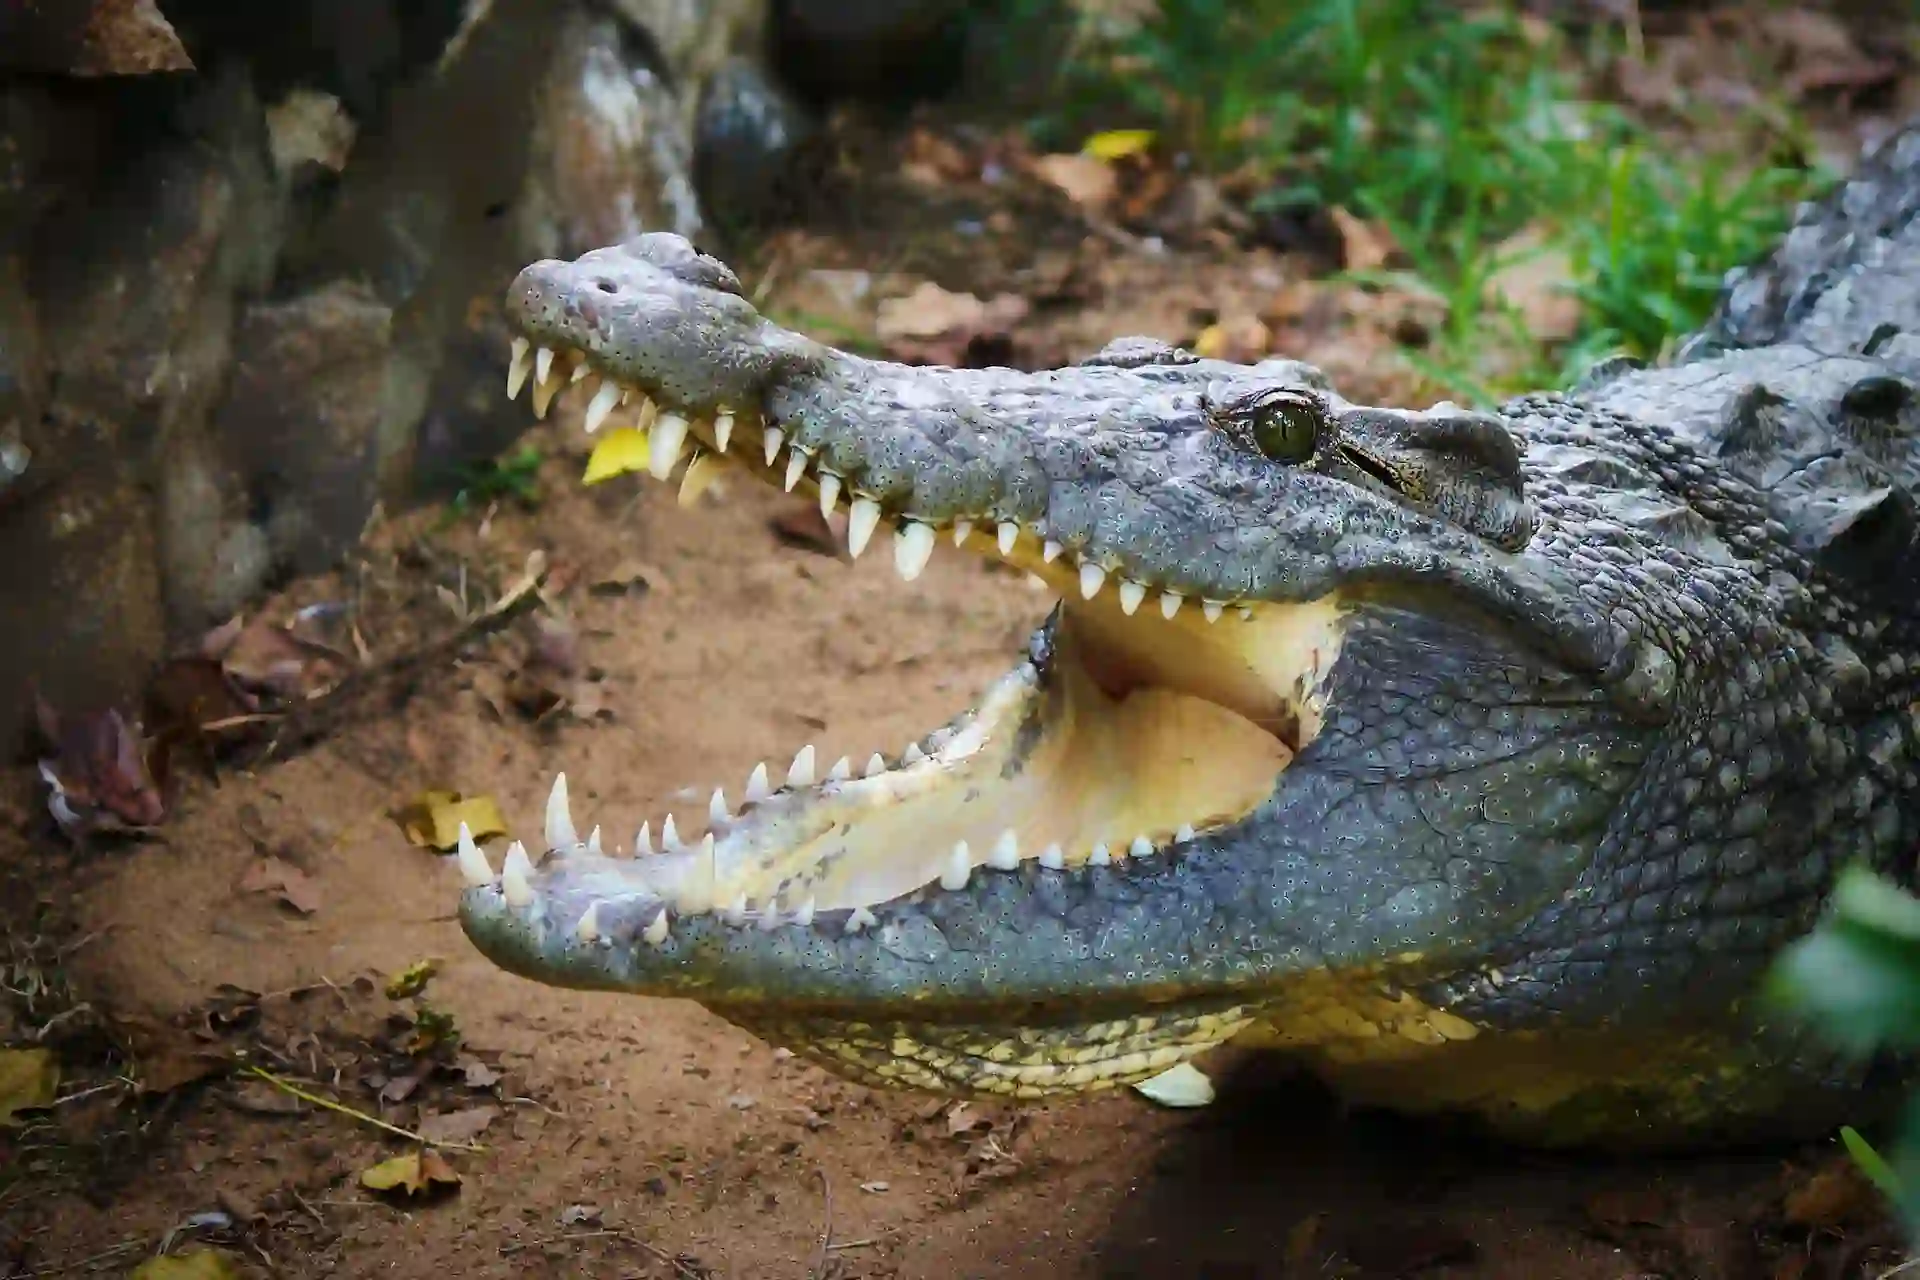 Alligator baring teeth - Are alligators reptiles or amphibians?